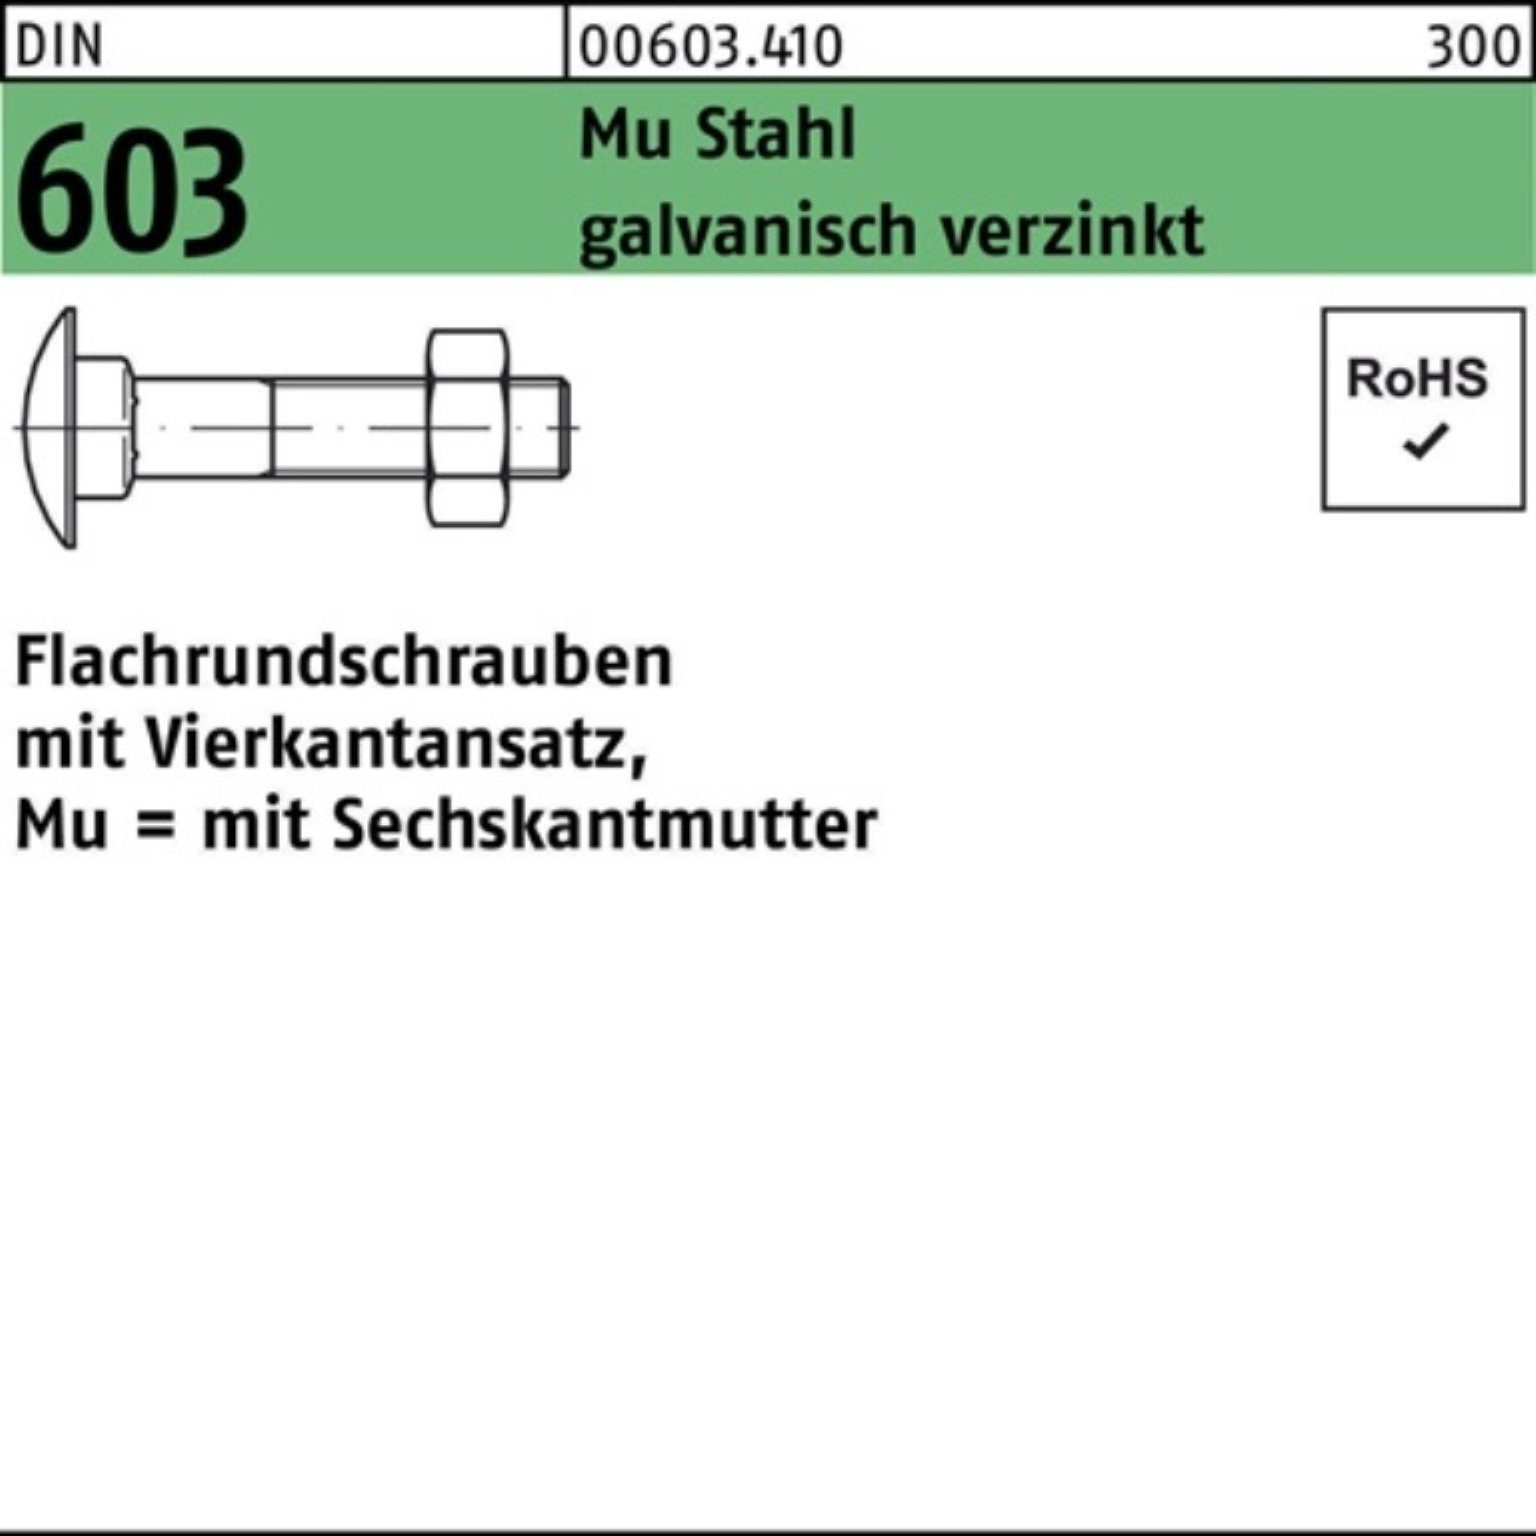 Vierkantansatz/6-ktmutter Reyher DIN Pack 603 Flachrundschraube M12x70 100er Schraube